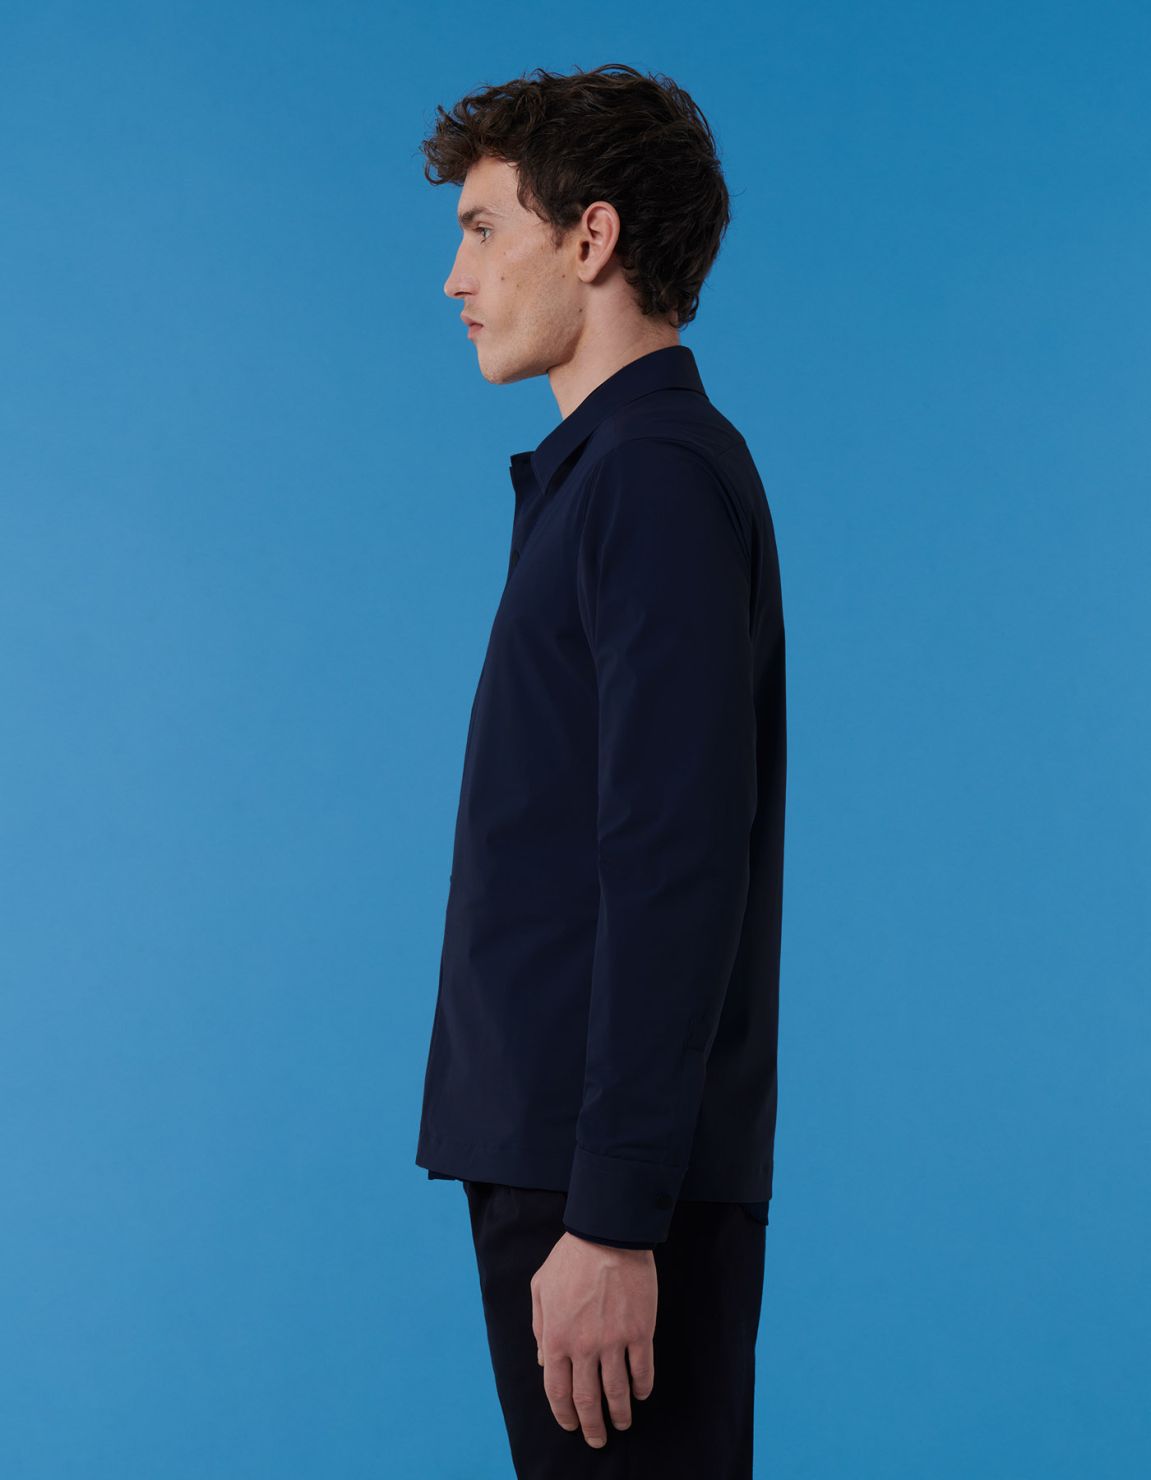 Dark Blue Textured Solid colour Shirt Collar spread Over 6